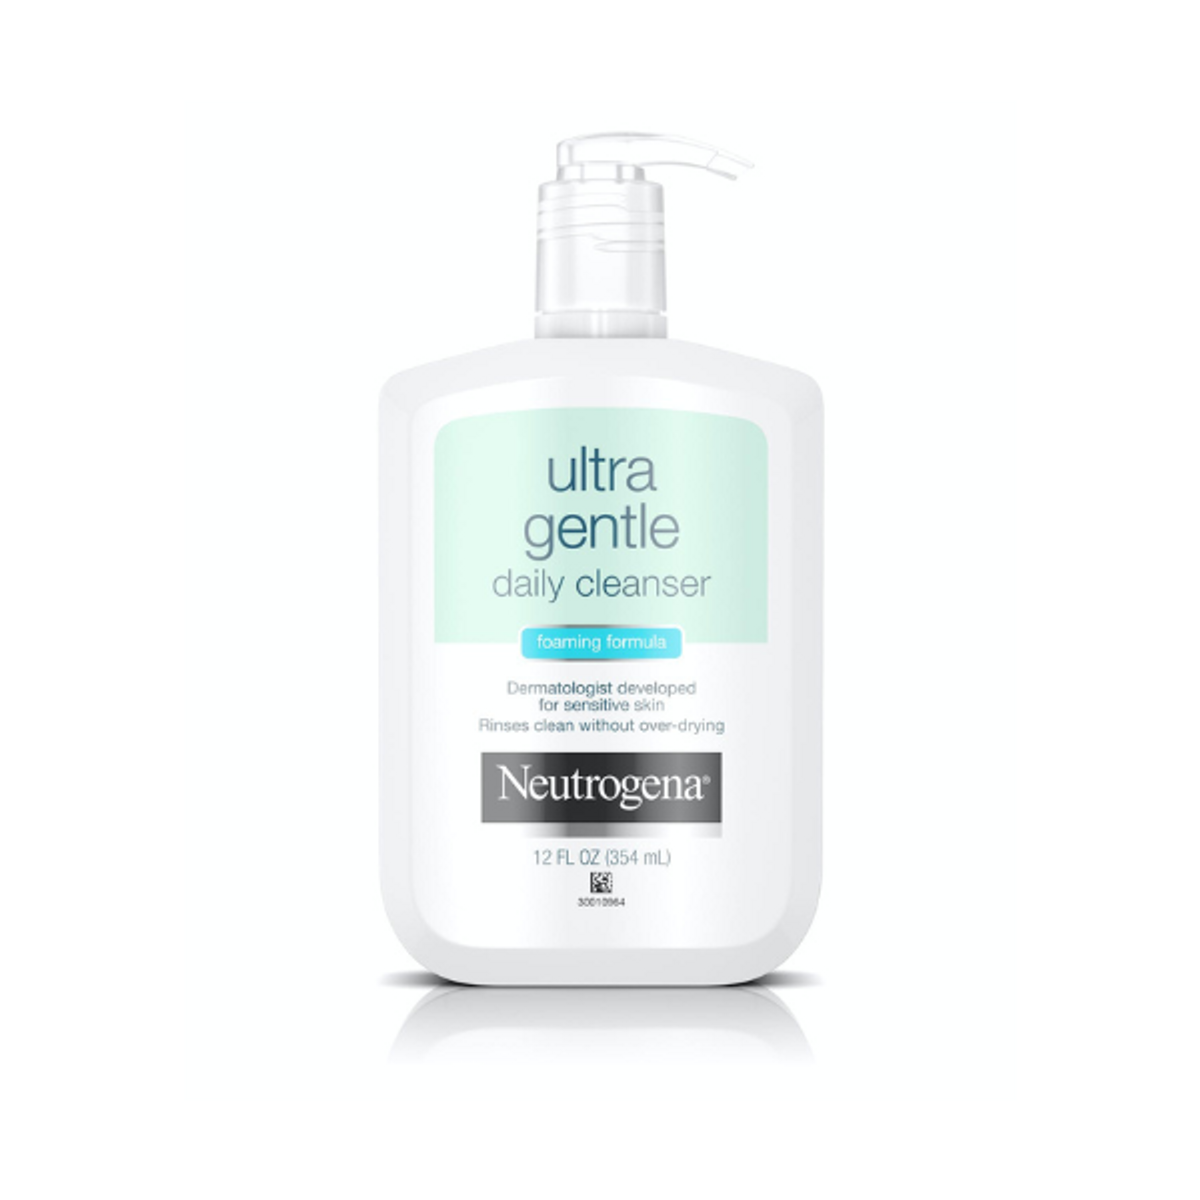 J&J Neutrogena Skin Care, Ultra Gentle Daily Foaming Cleanser